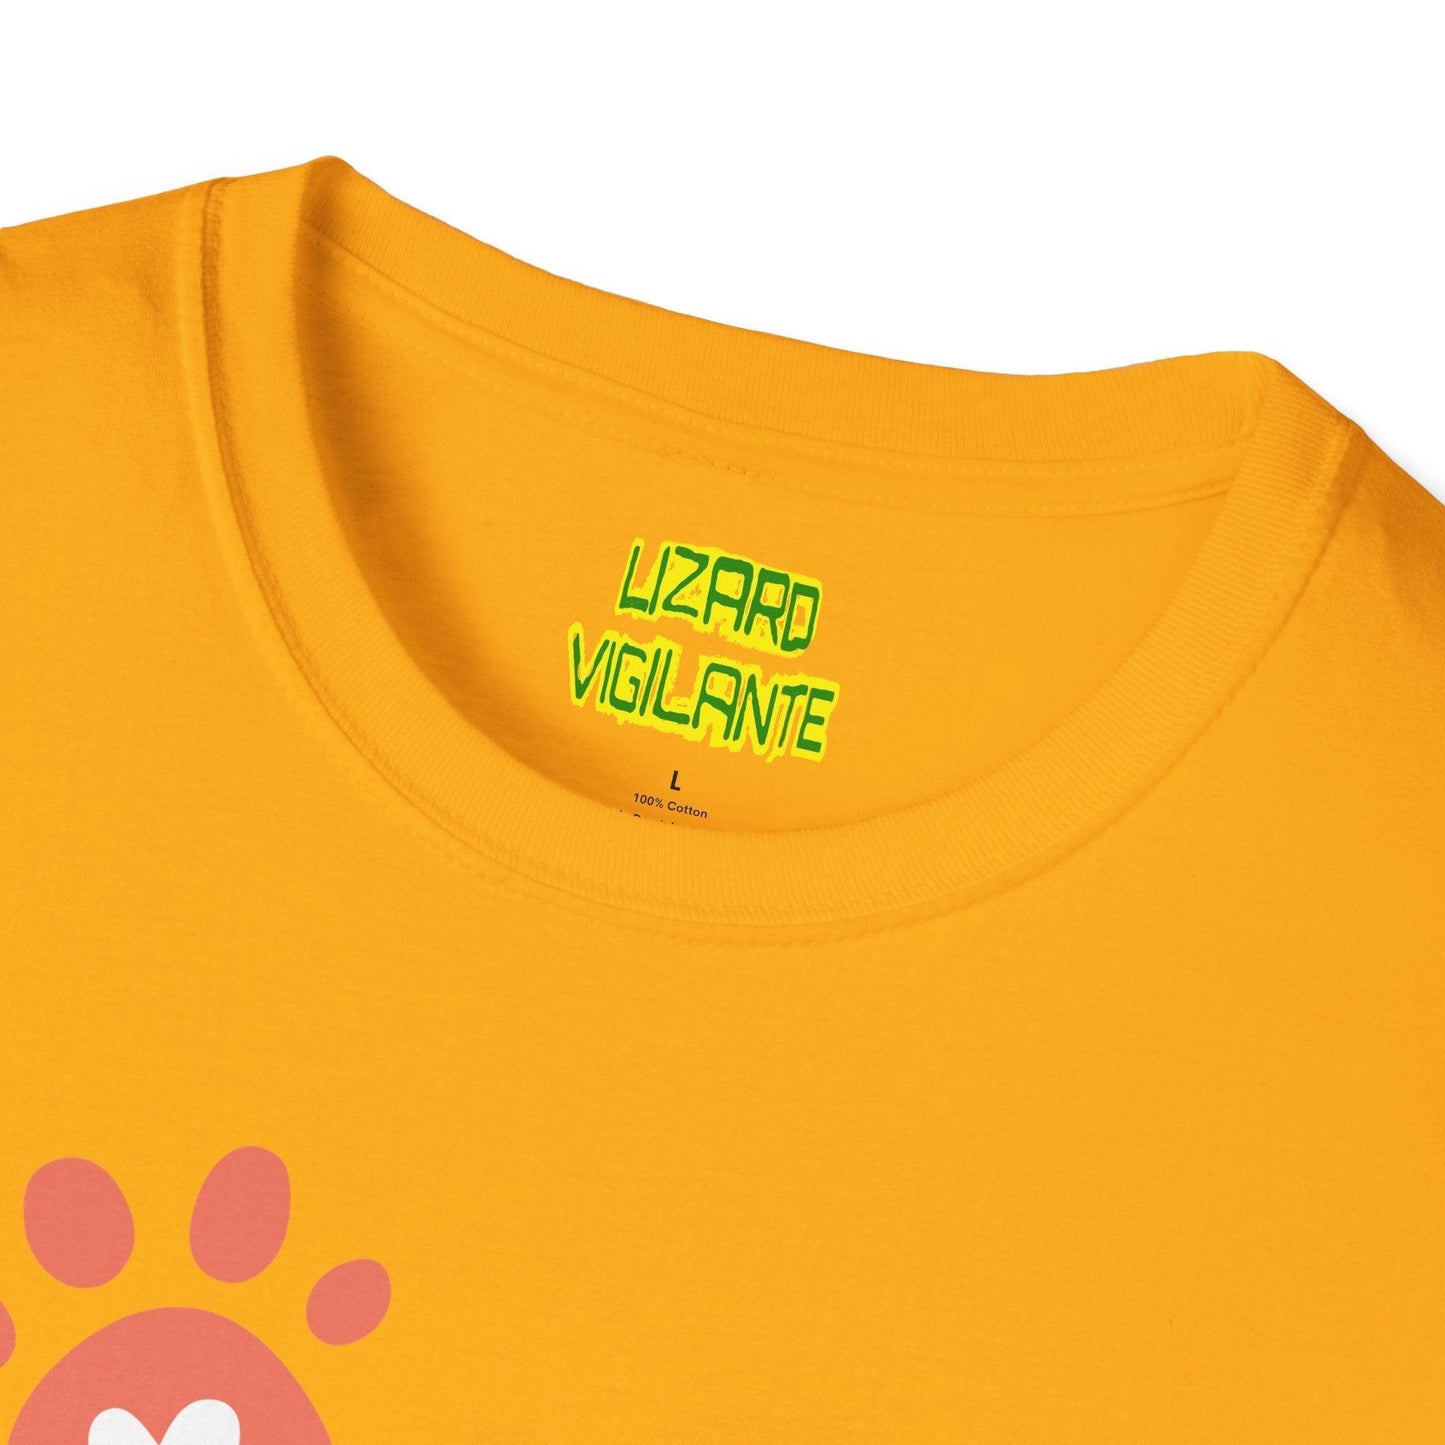 Dog Mom WITH AN ATTITUDE Unisex Softstyle T-Shirt - Lizard Vigilante